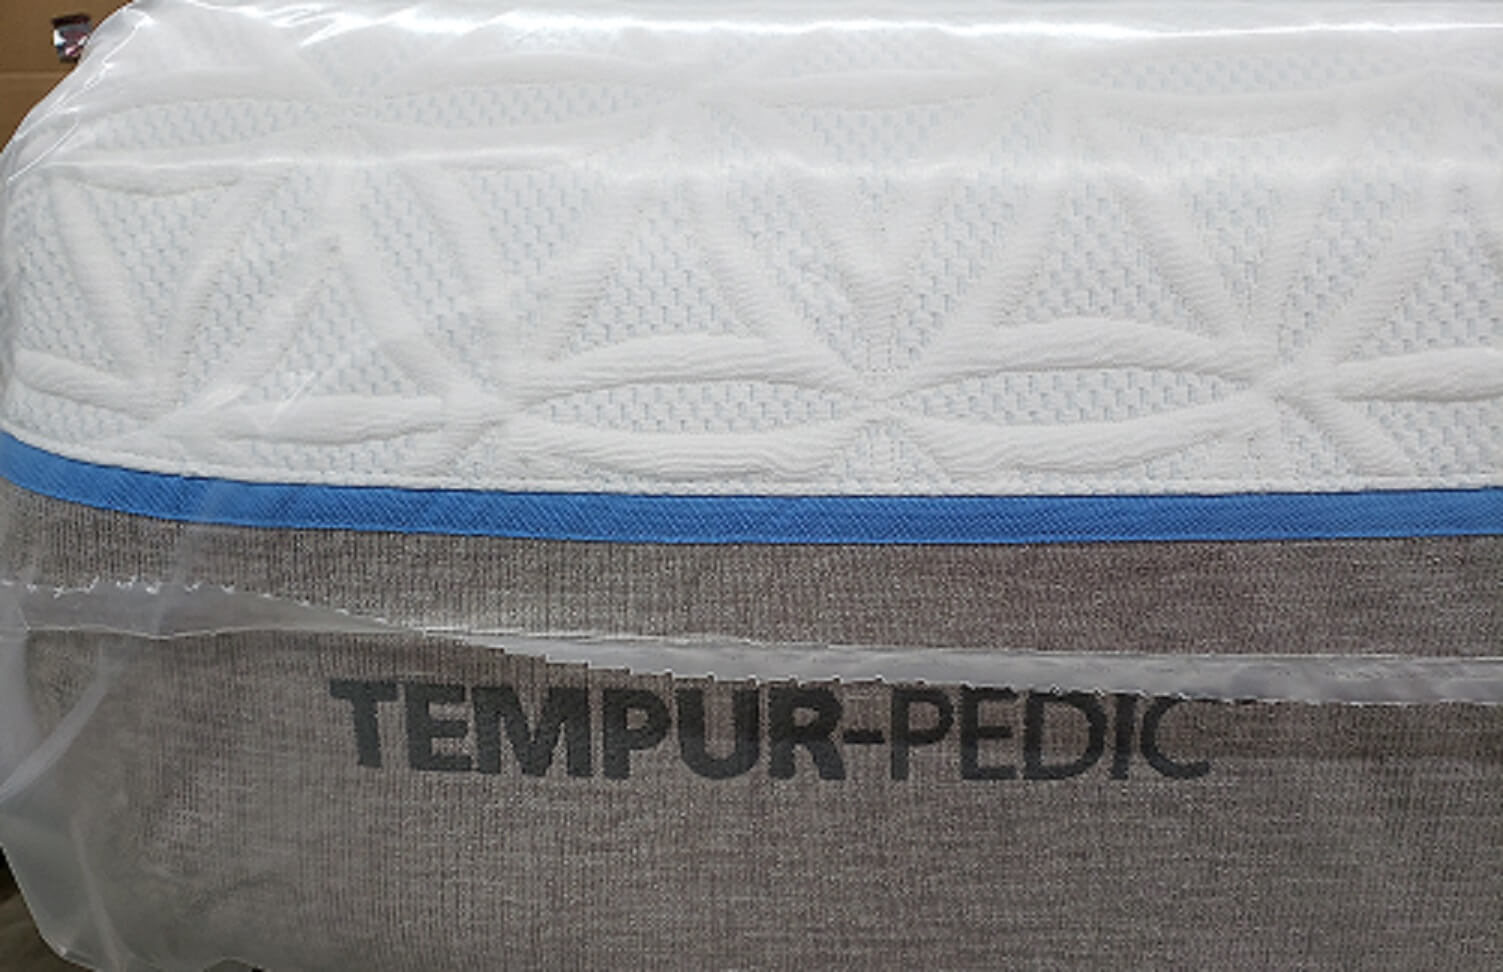 tempurpedic cloud supreme mattress prices